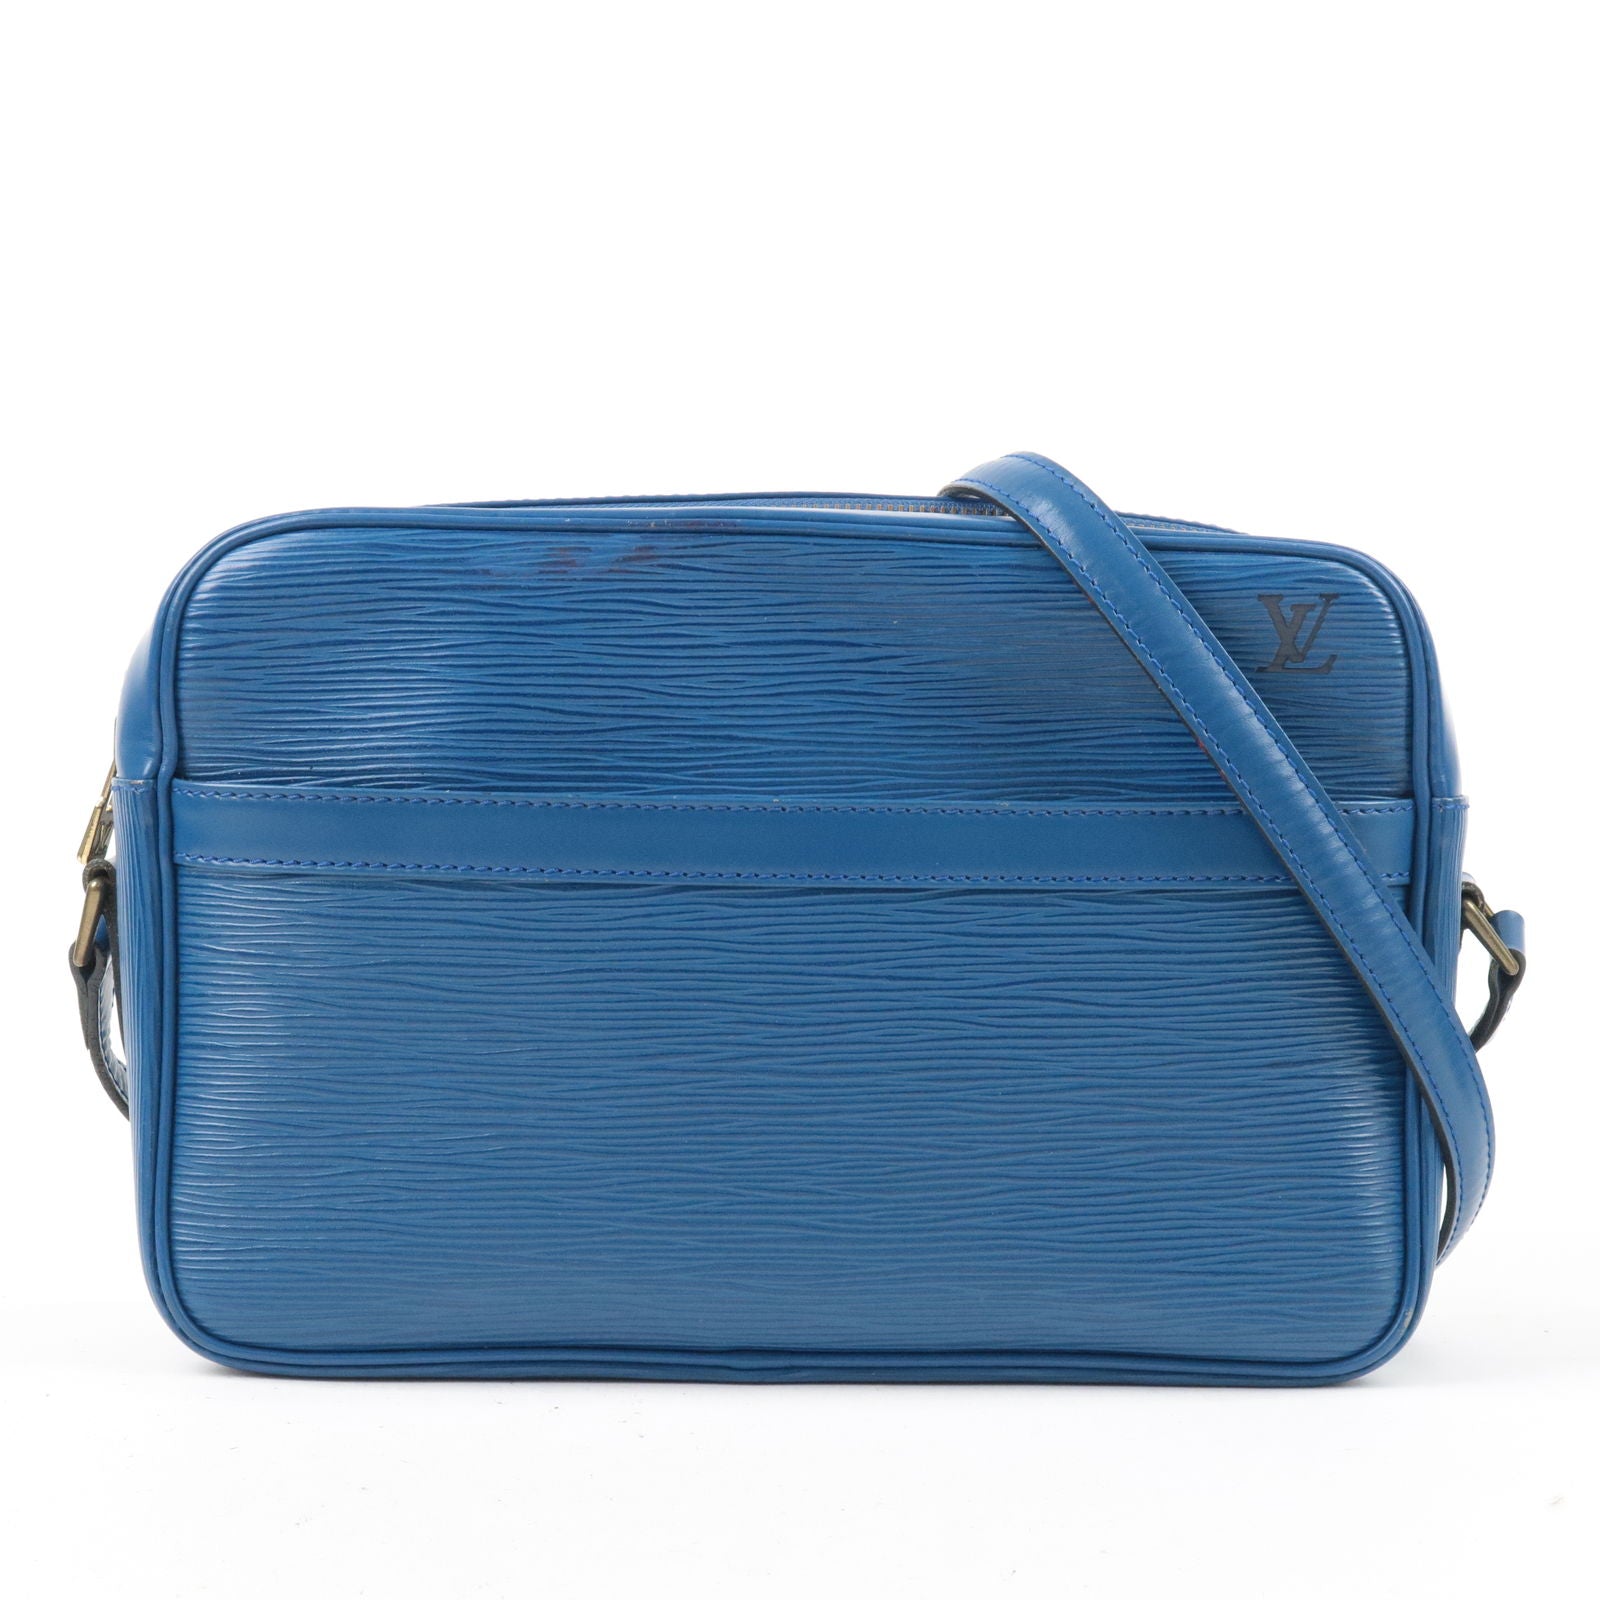 Louis Vuitton - Cabas Voyage Vintage Tote Bag Navy Blue and Dark